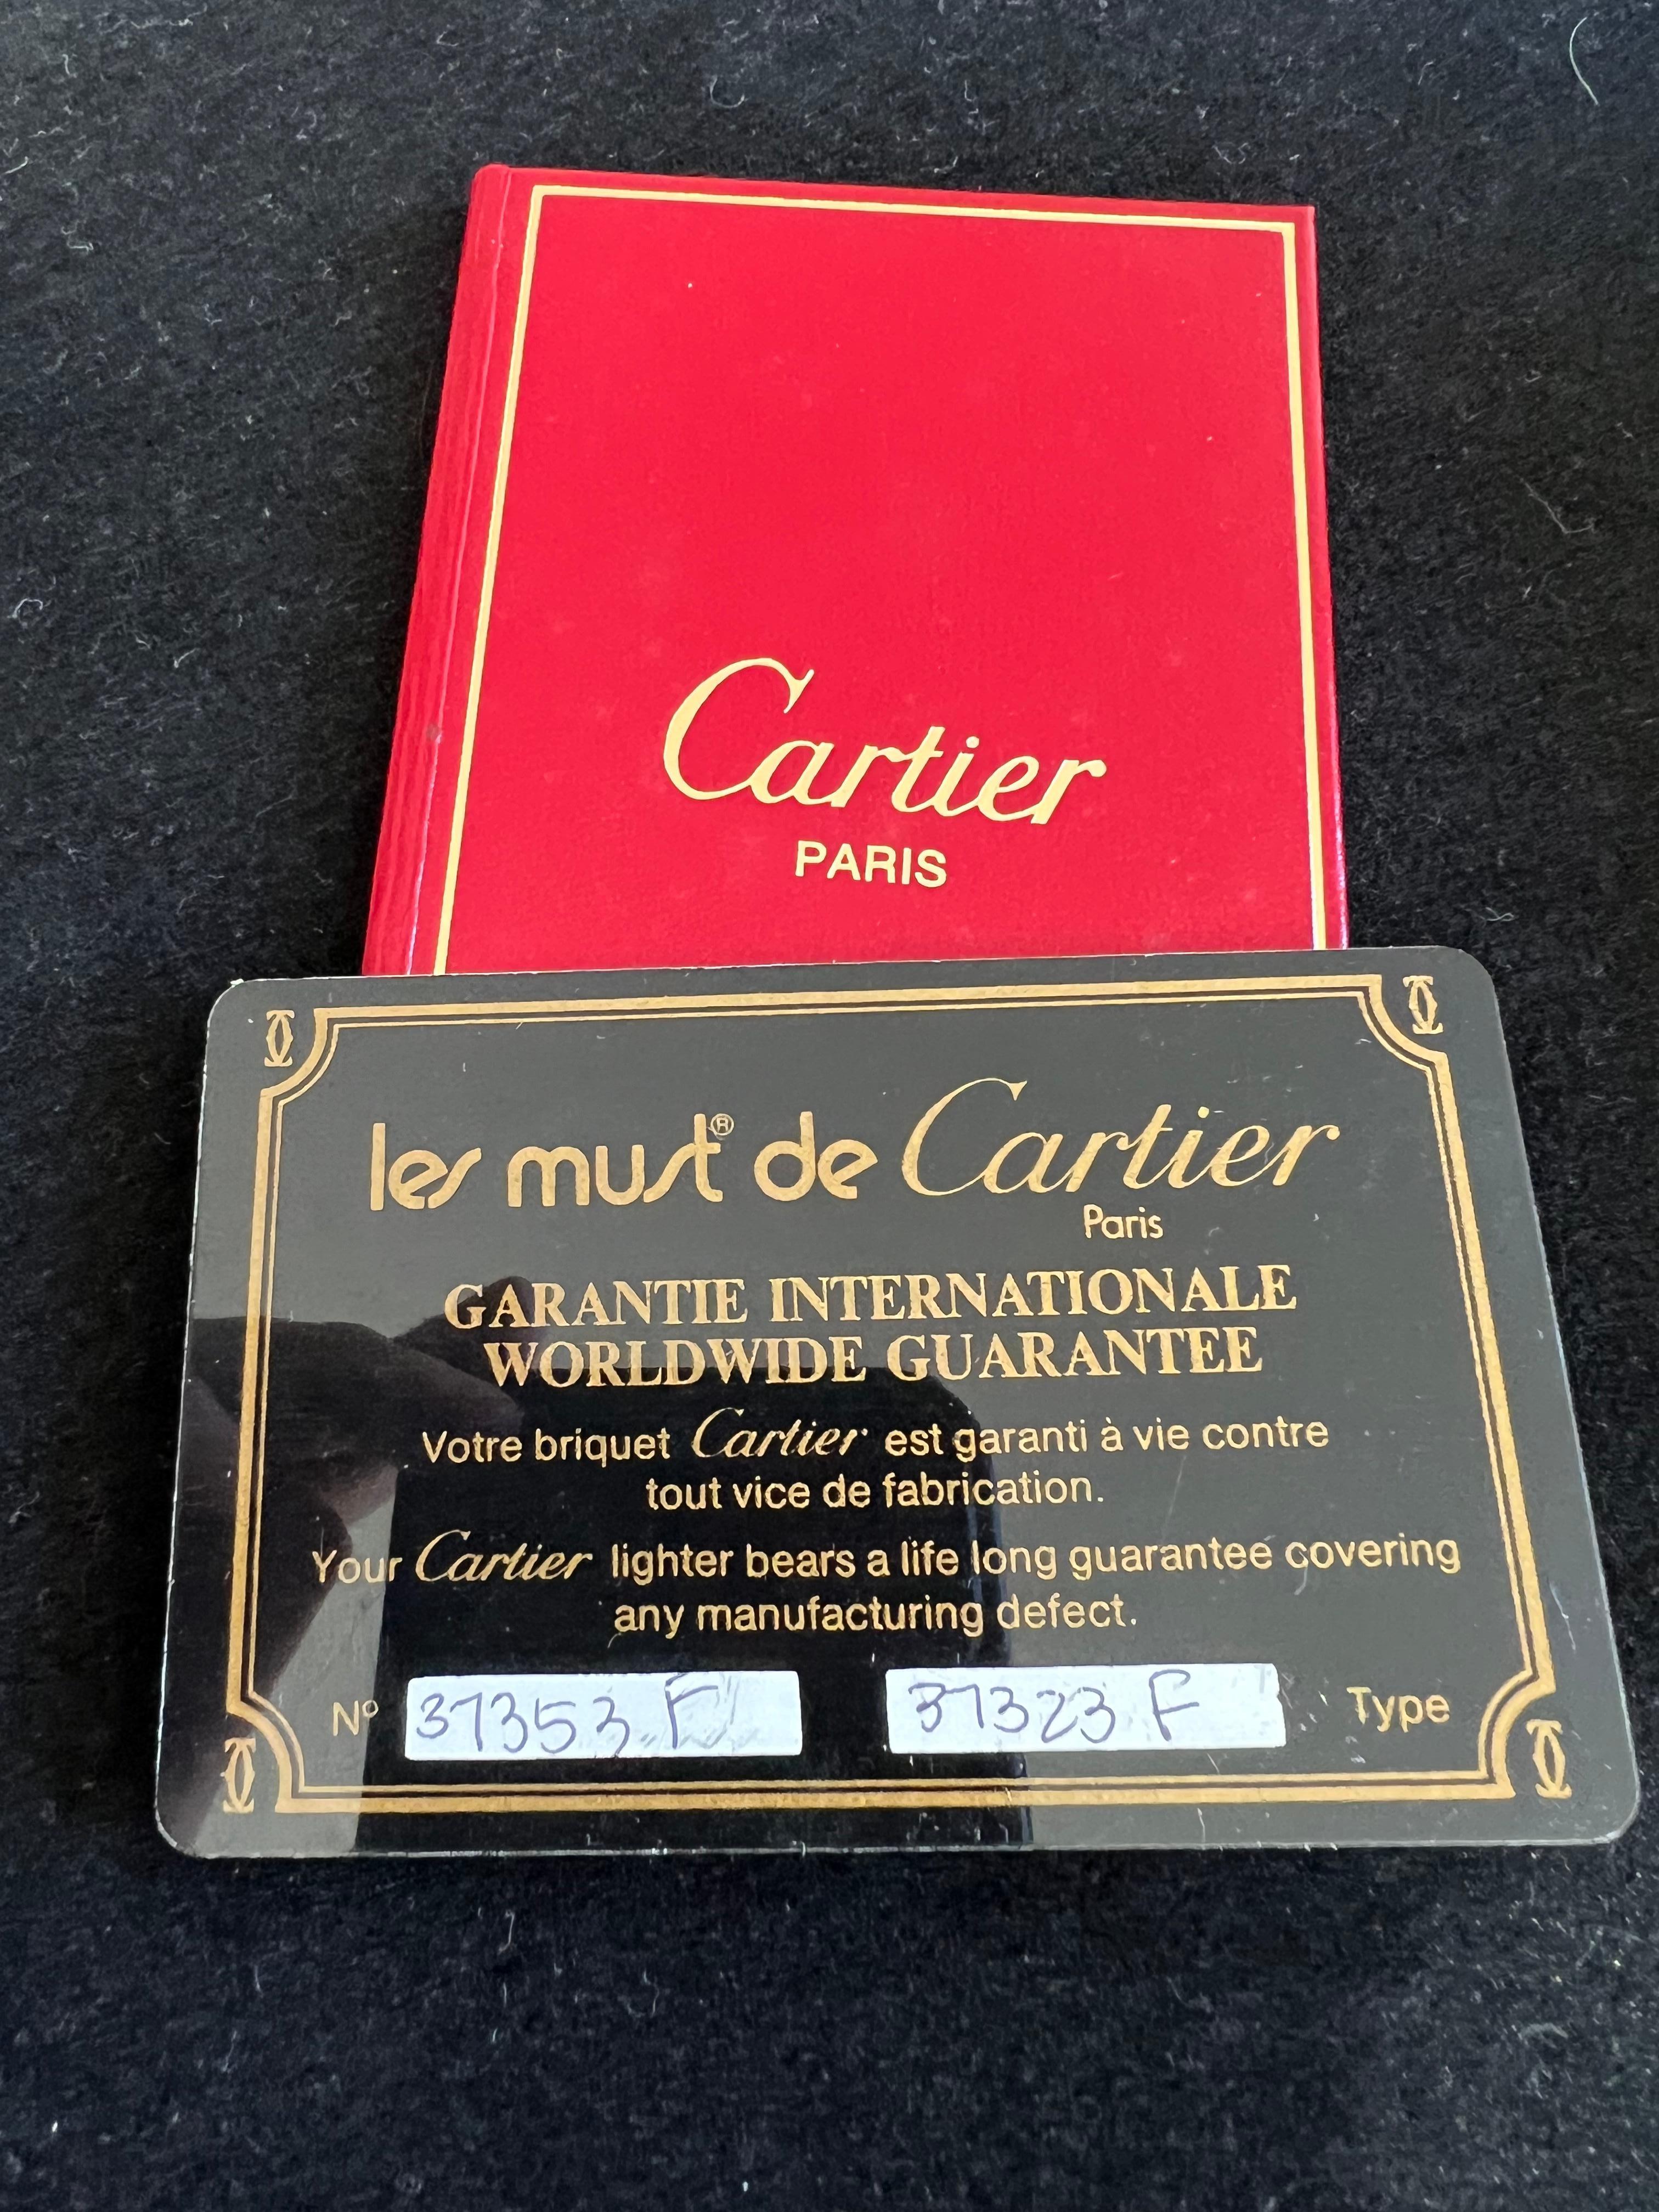 A Les Must De Cartier Paris 18k gold plated lighter 1